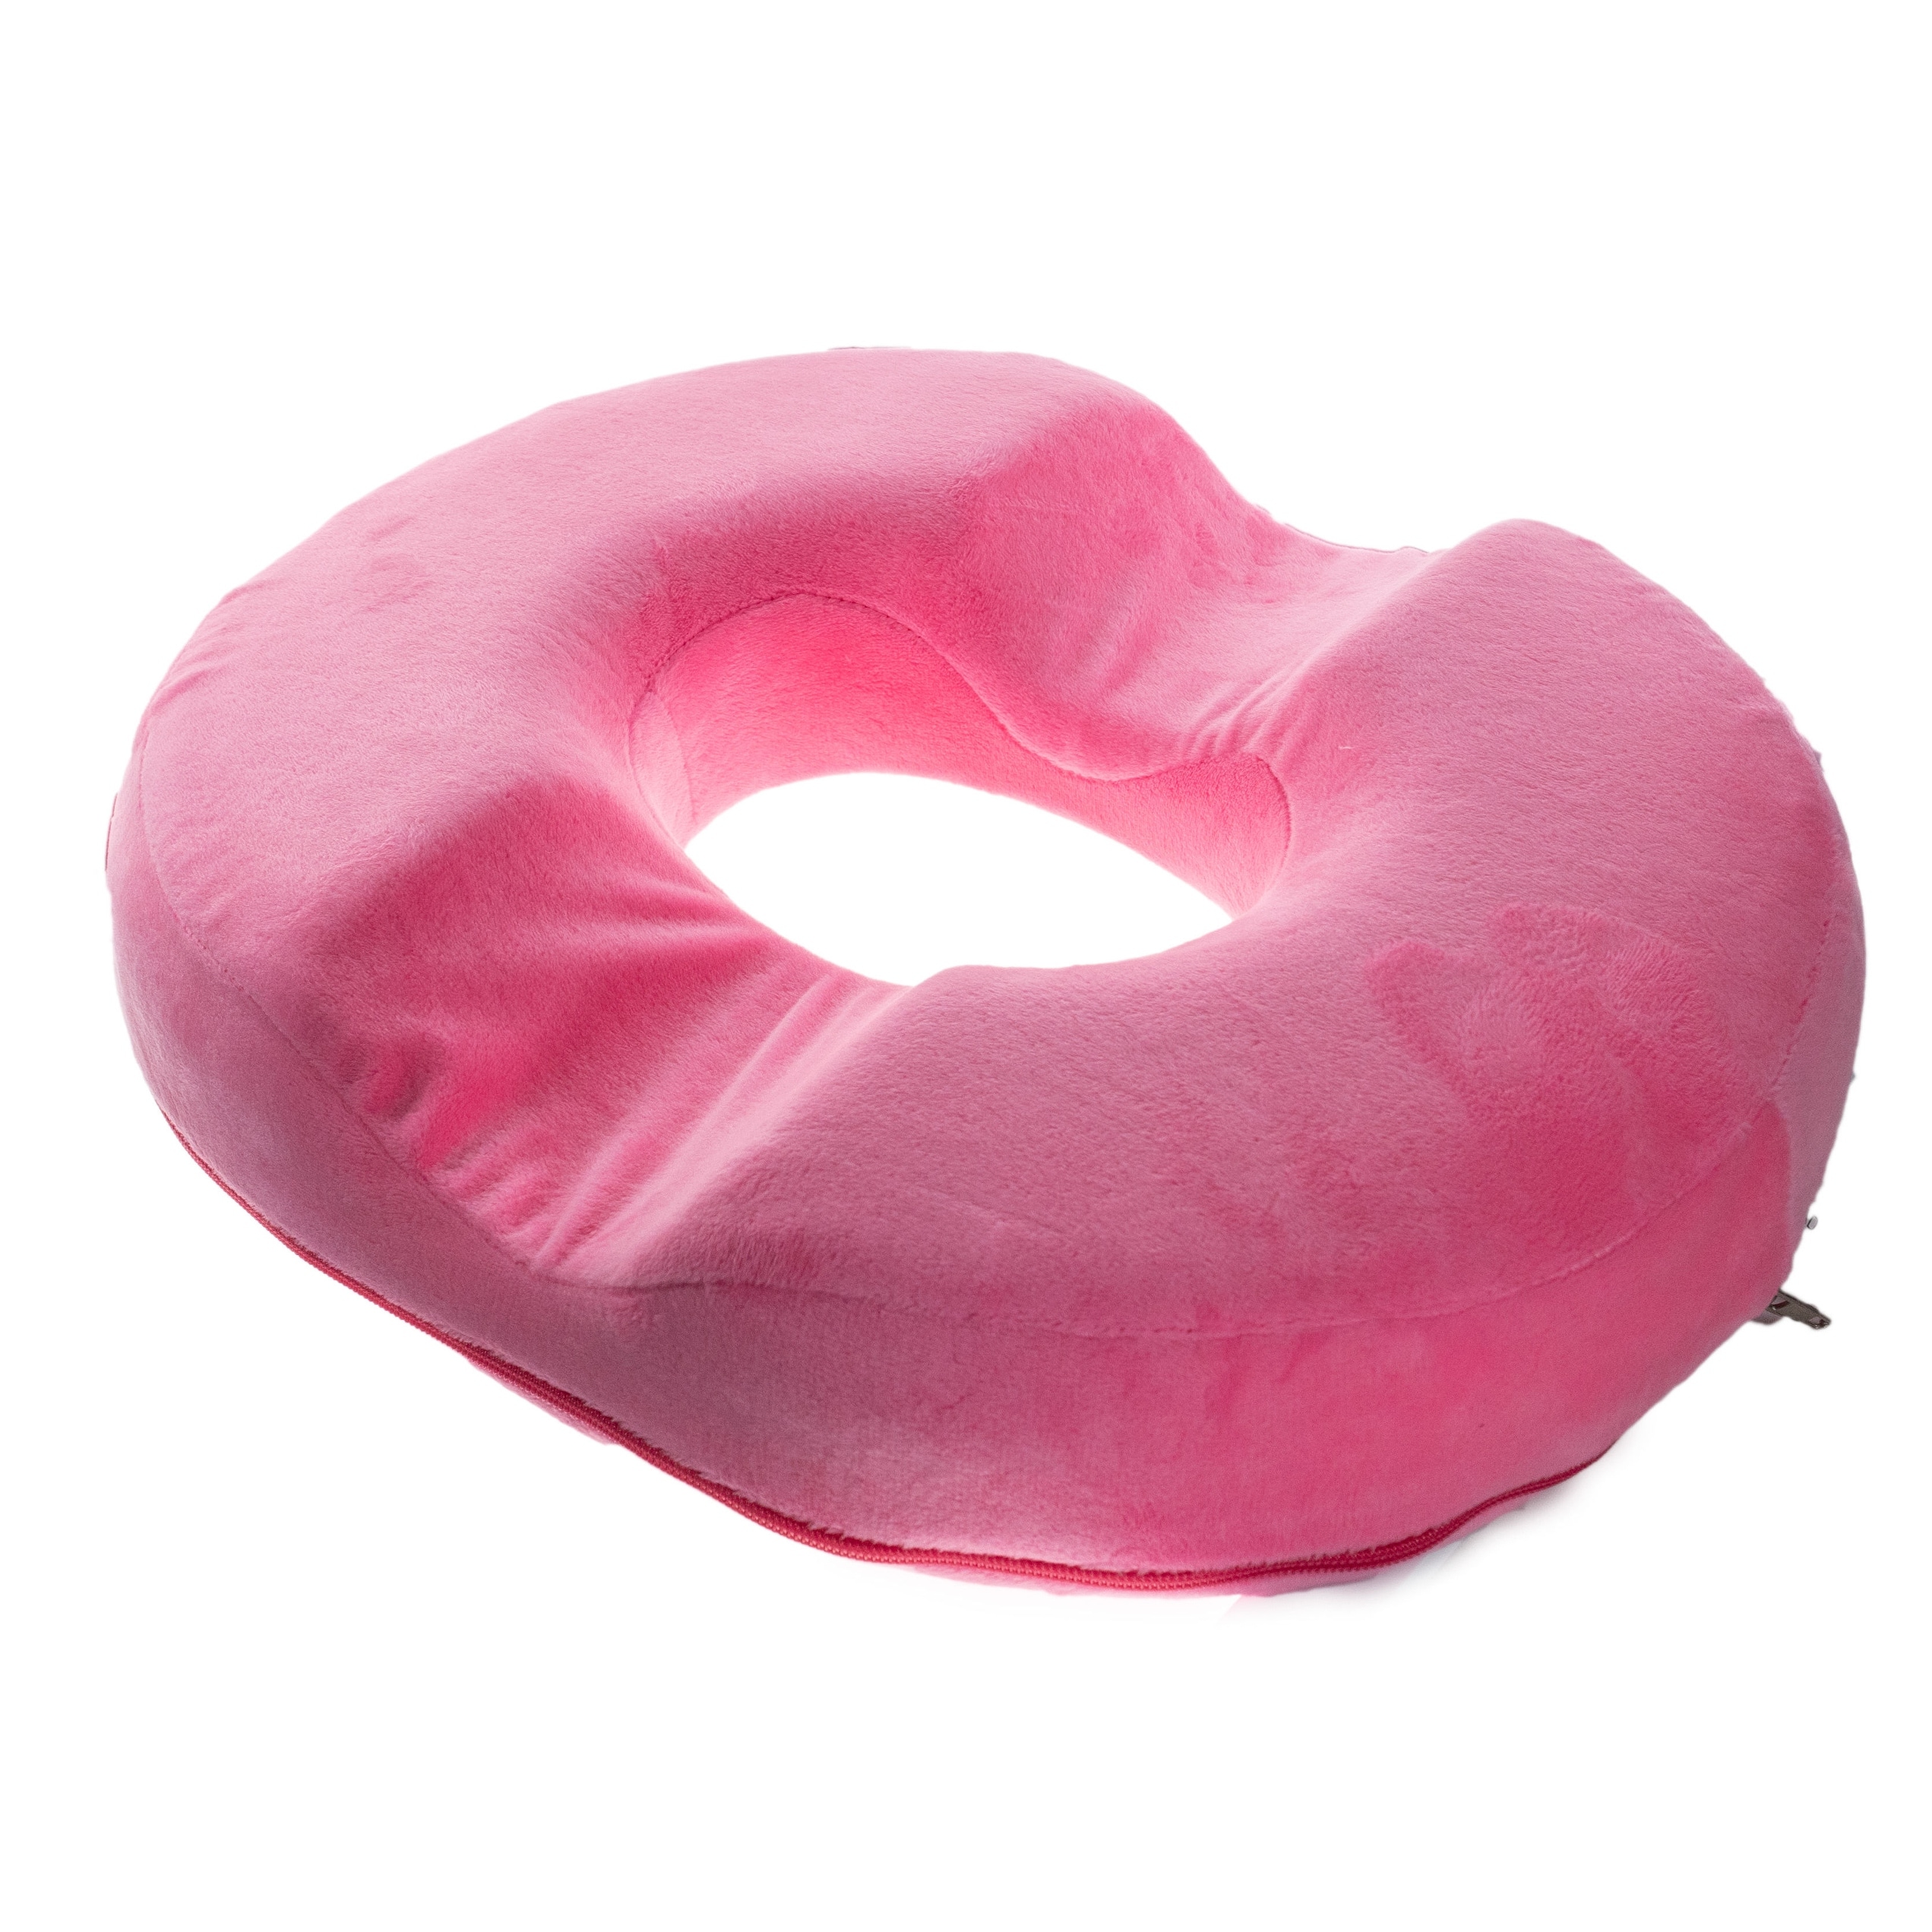  H. Luxury Donut Pillow for Tailbone Pain, Hemorrhoid